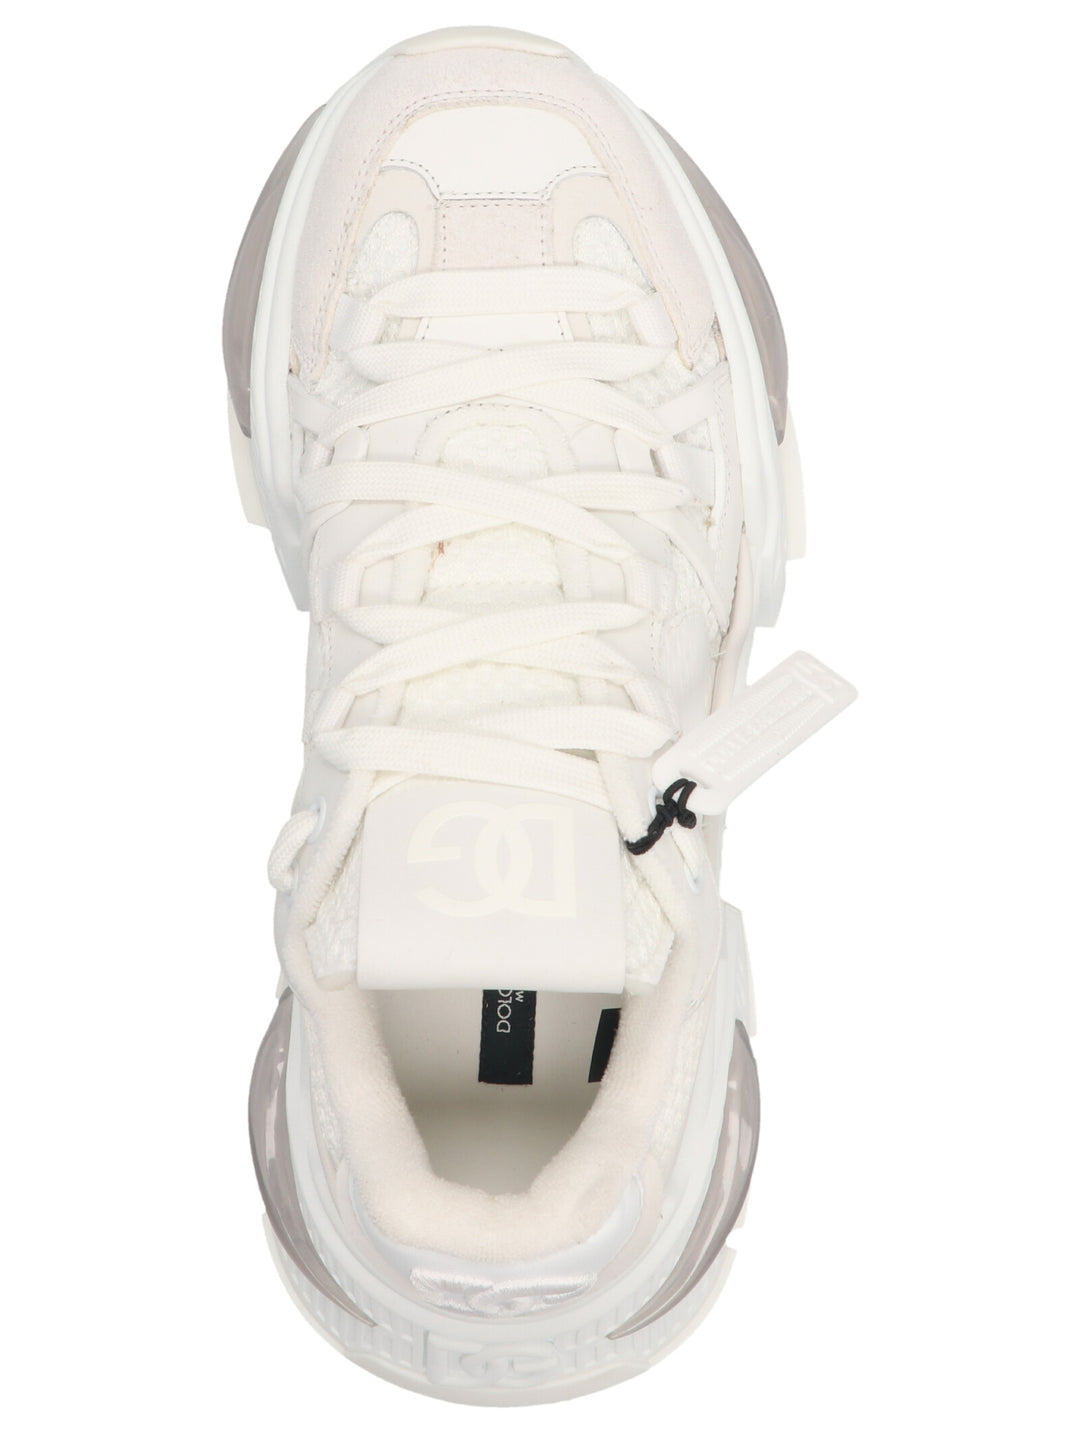 Airmaster Sneakers Bianco